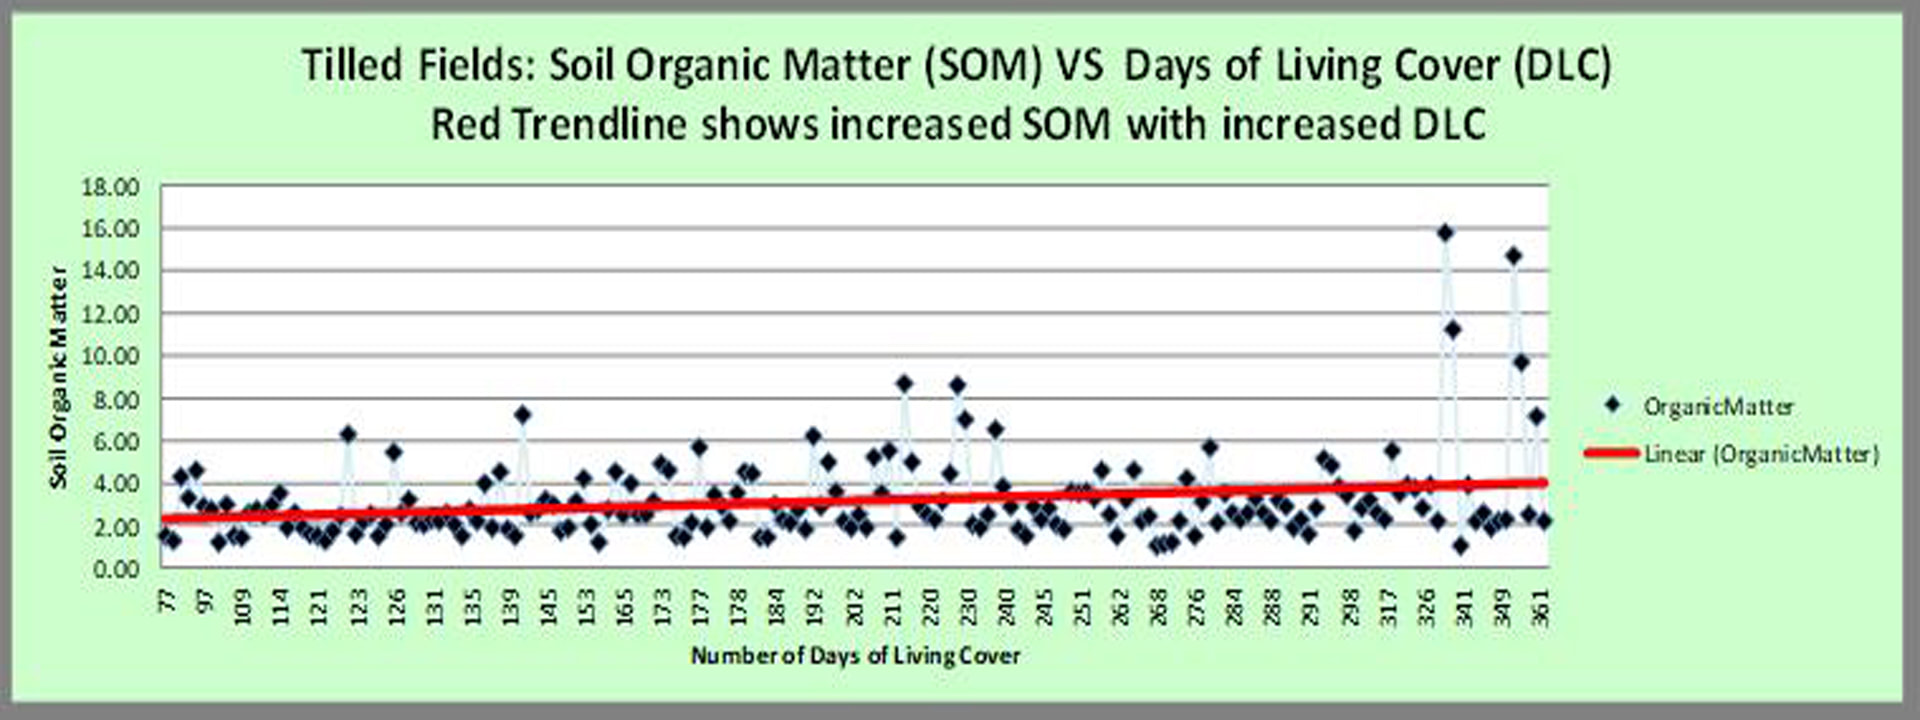 More days of living cover improves soil health